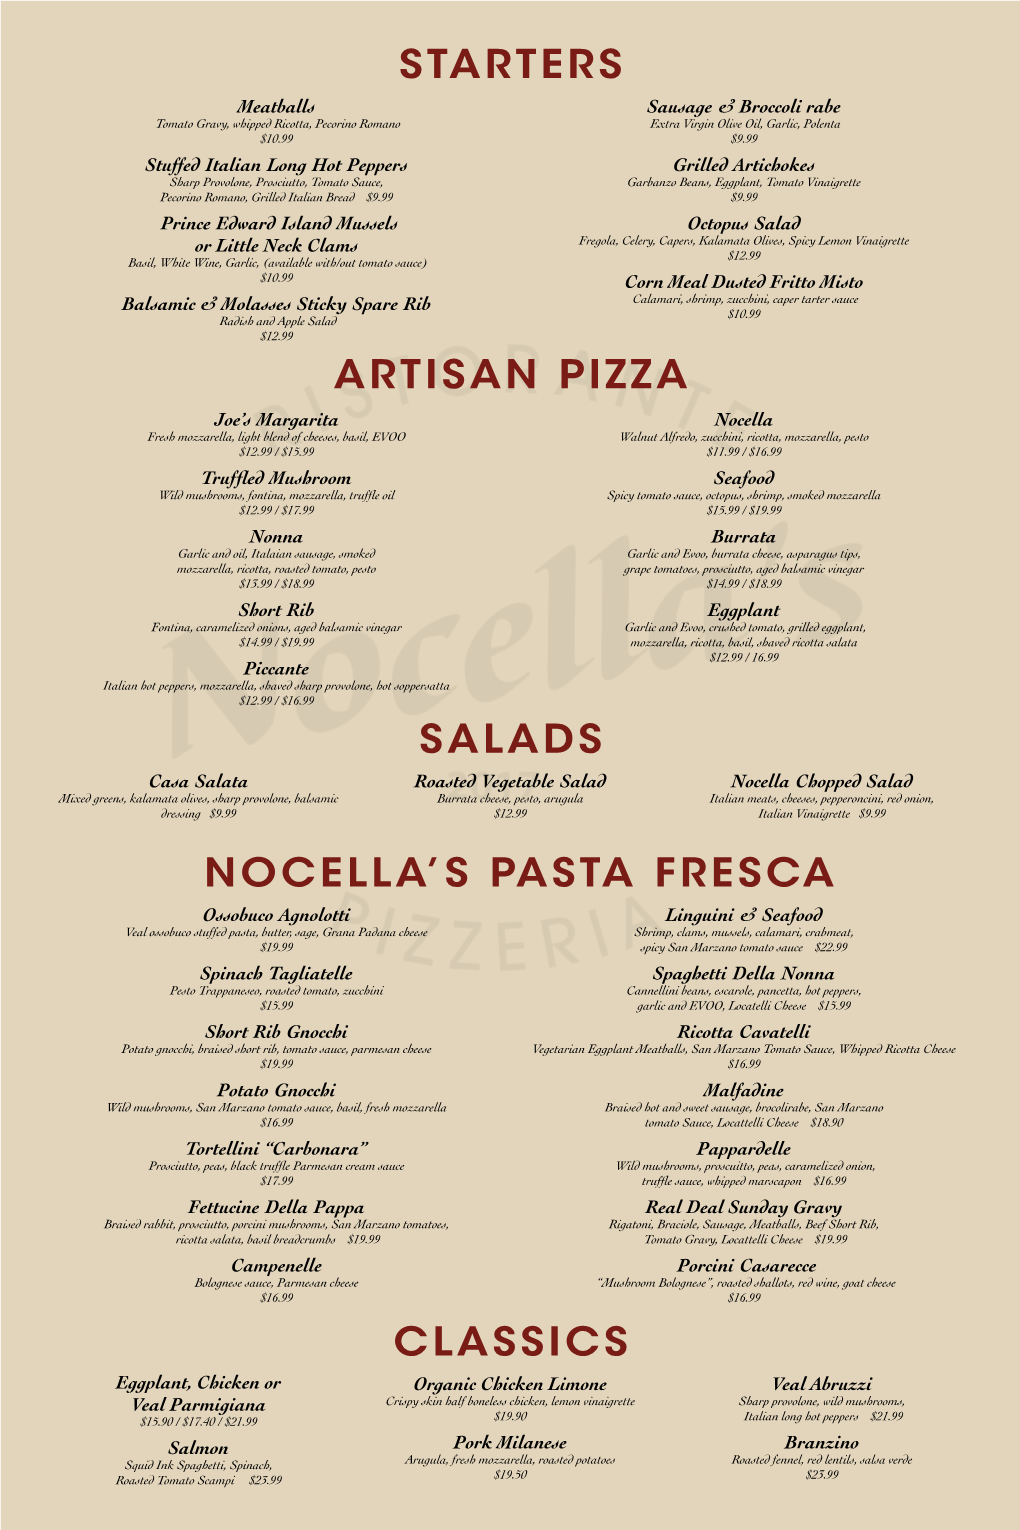 Artisan Pizza Starters Salads Nocella's Pasta Fresca